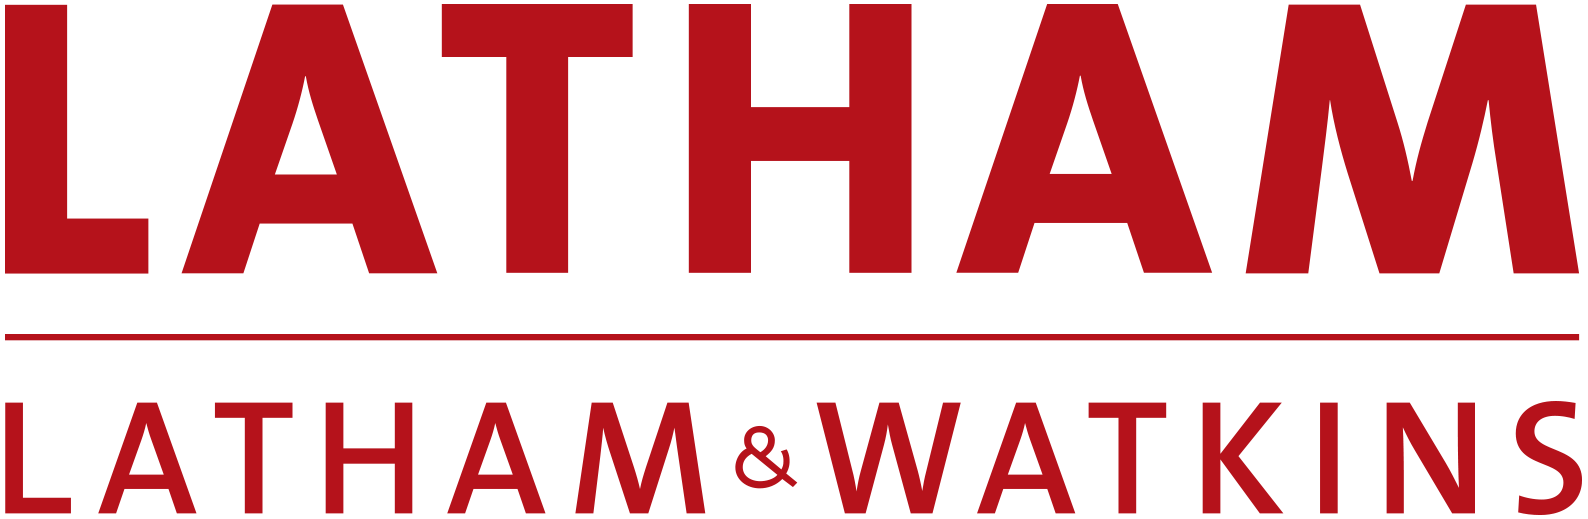 03.2_Latham & Watkins logo